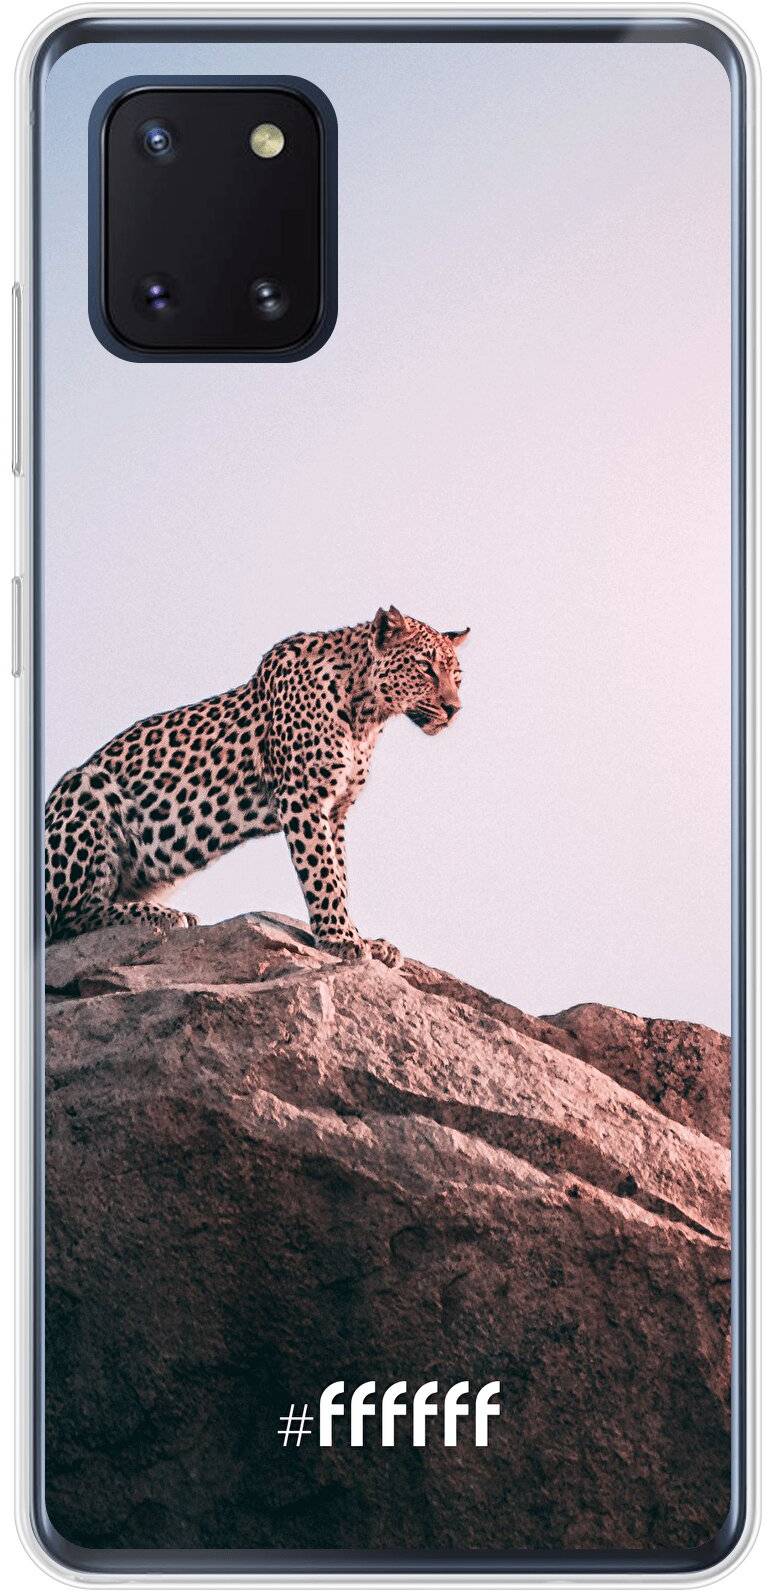 Leopard Galaxy Note 10 Lite